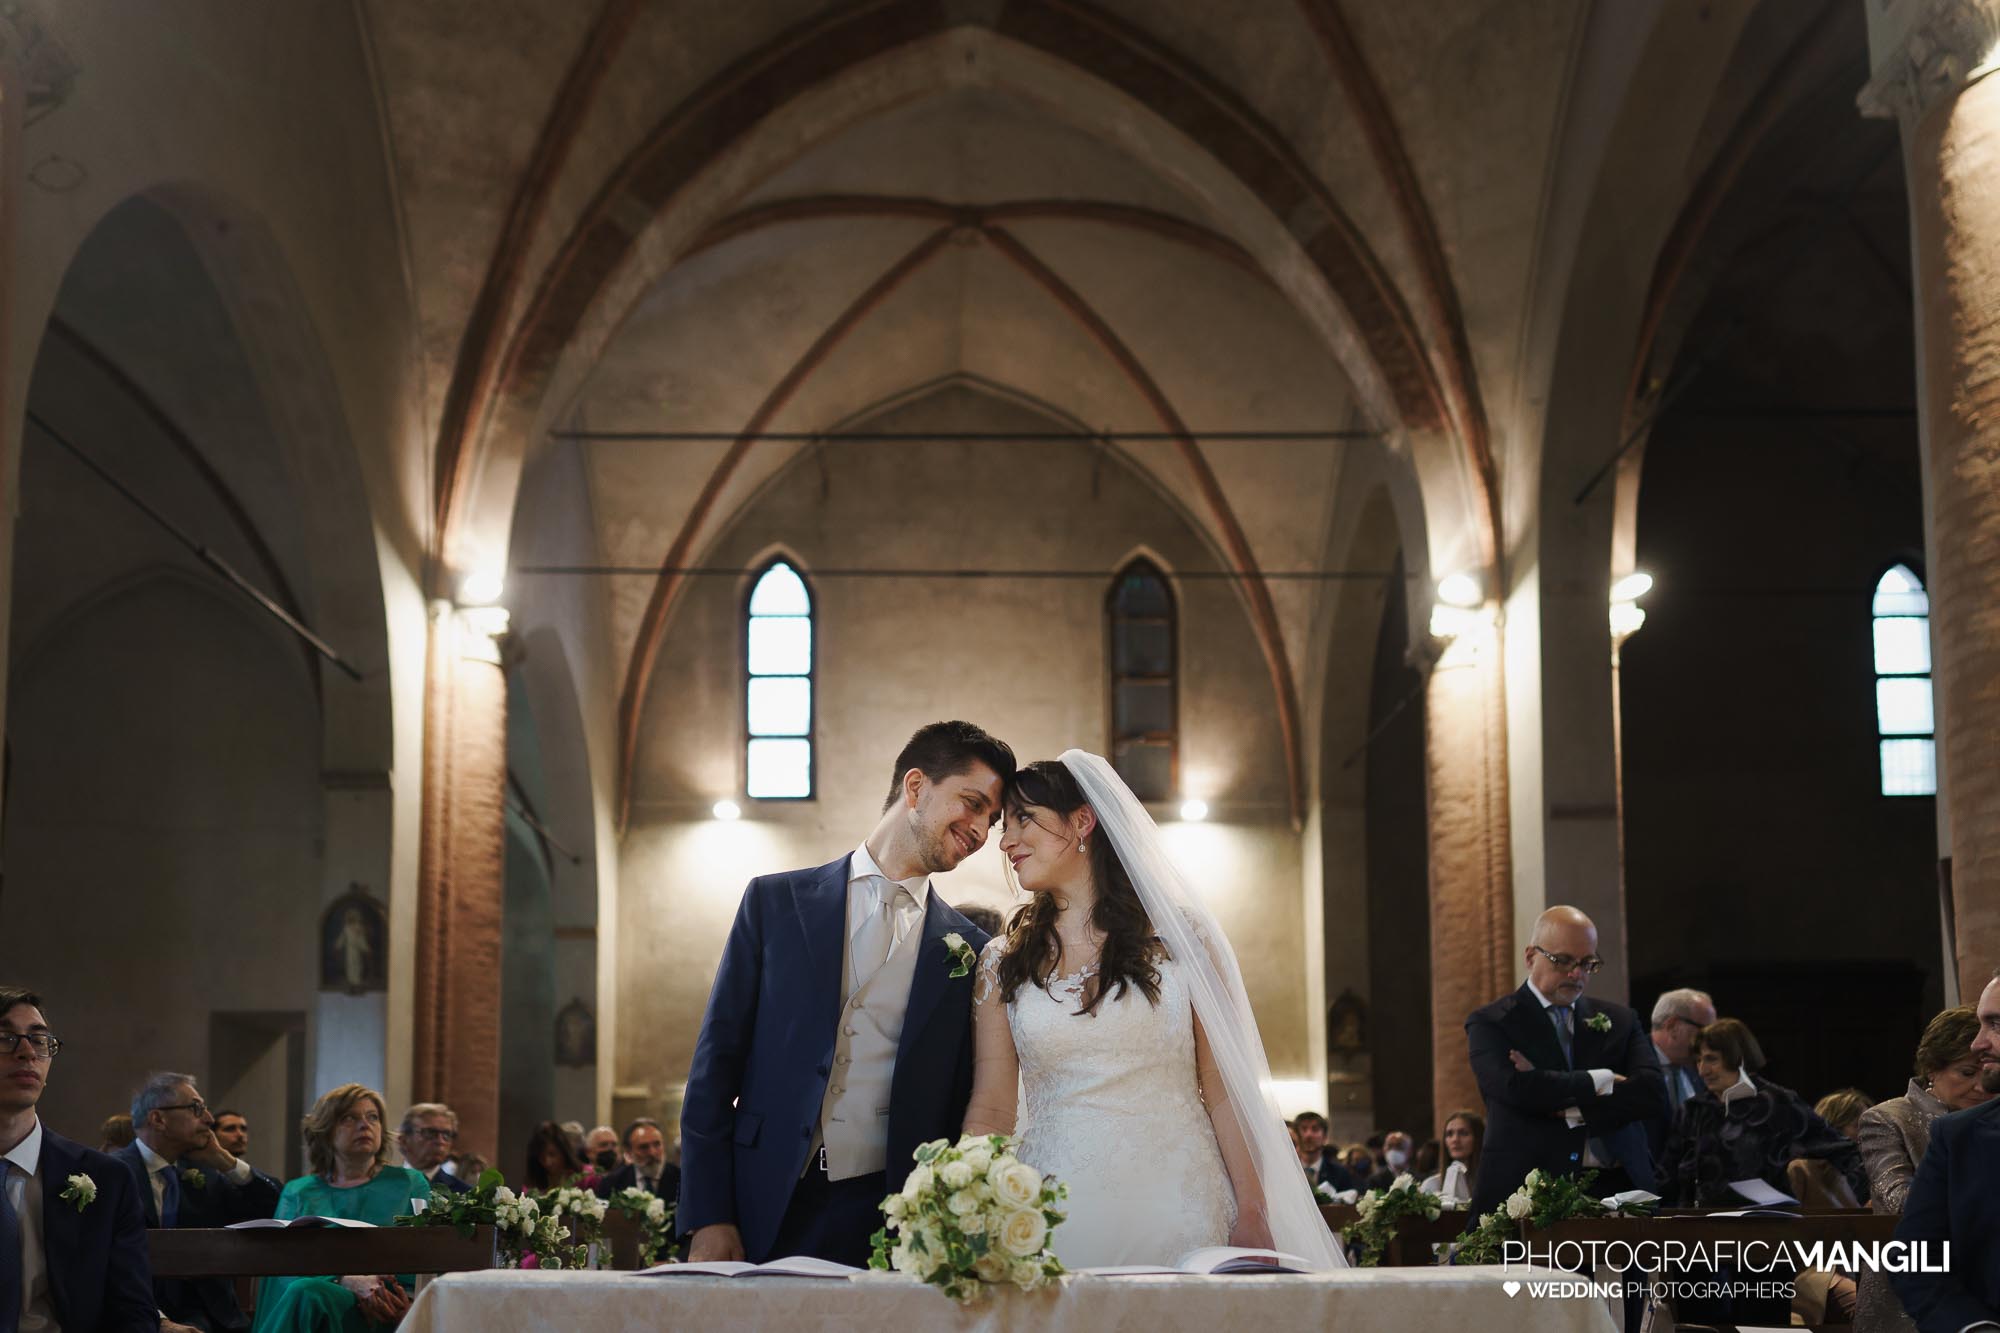 029 foto nozze wedding reportage sposi rito religioso chiesa milano chiara oliviero